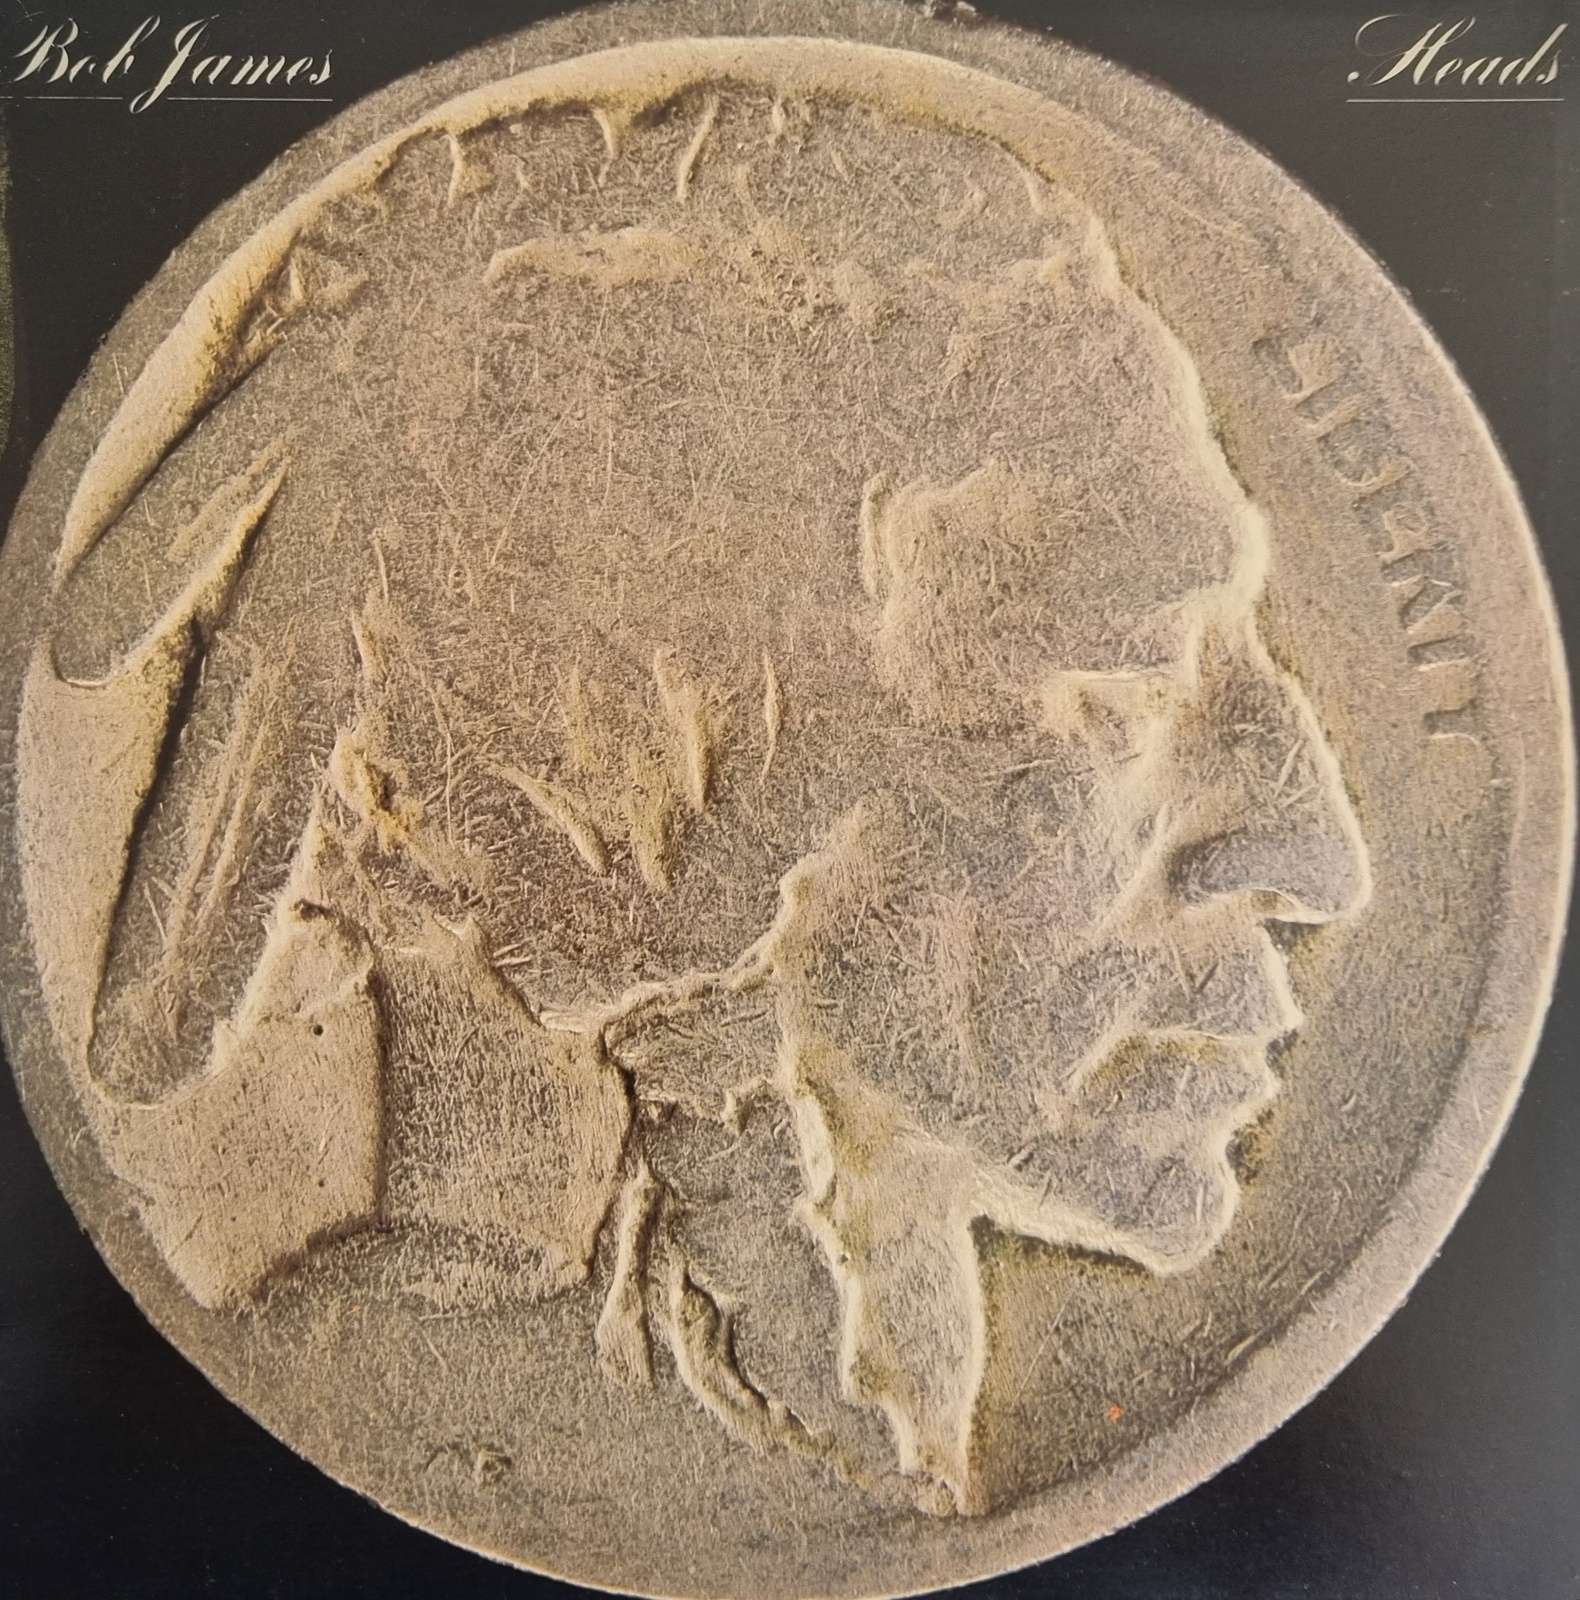 Bob James - Heads (LP)